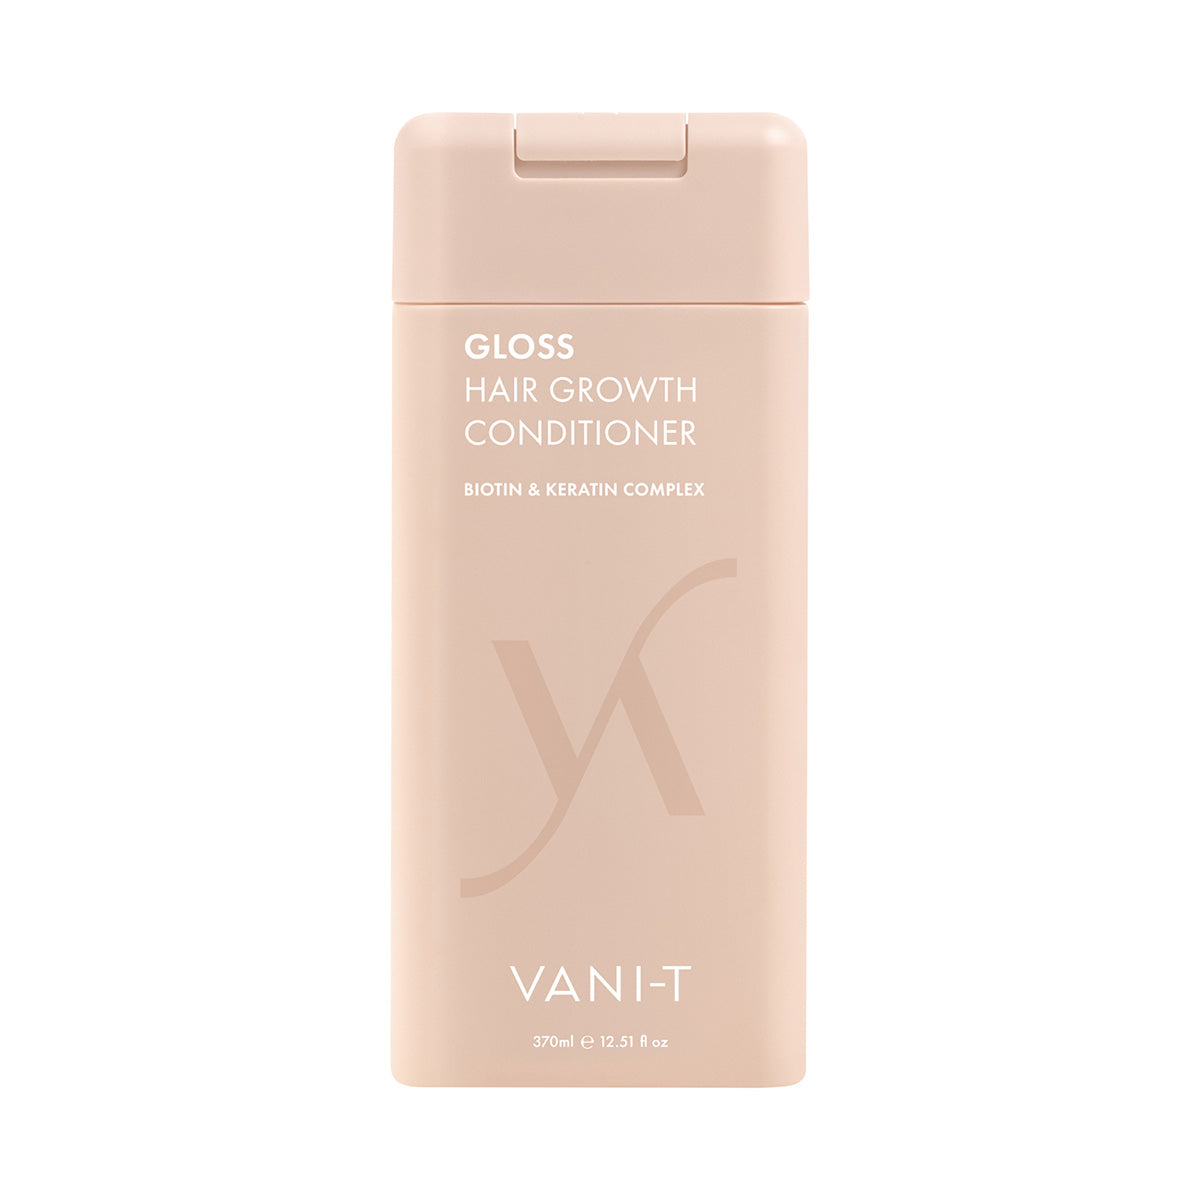 VANI-T Gloss Hair Growth Conditioner 375ml 1